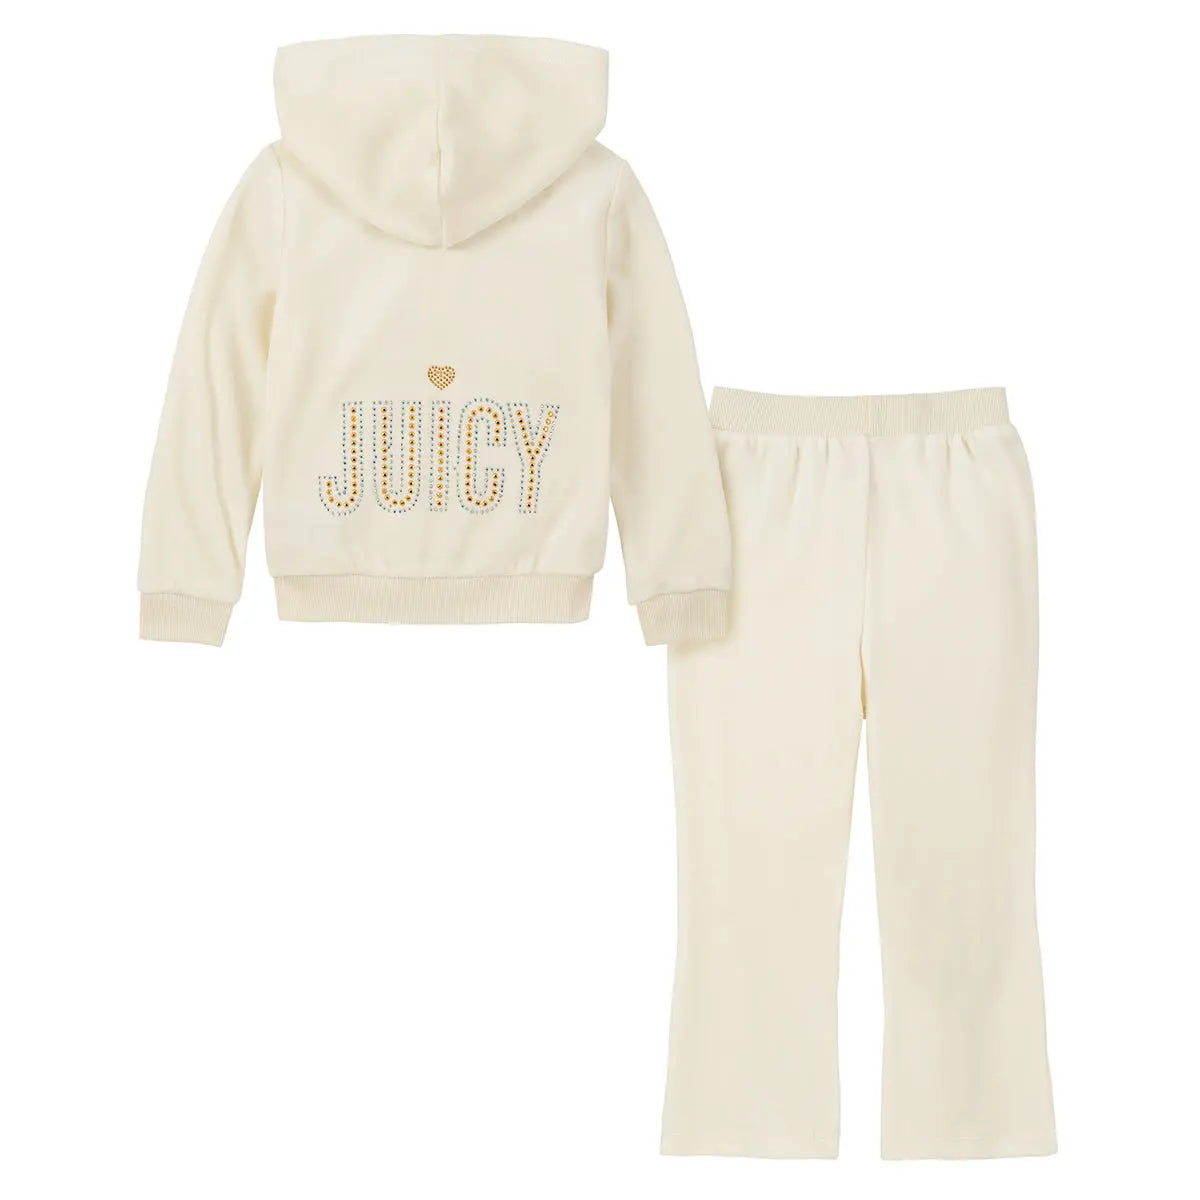 Juicy Couture Girls Velour Sweatsuit Set